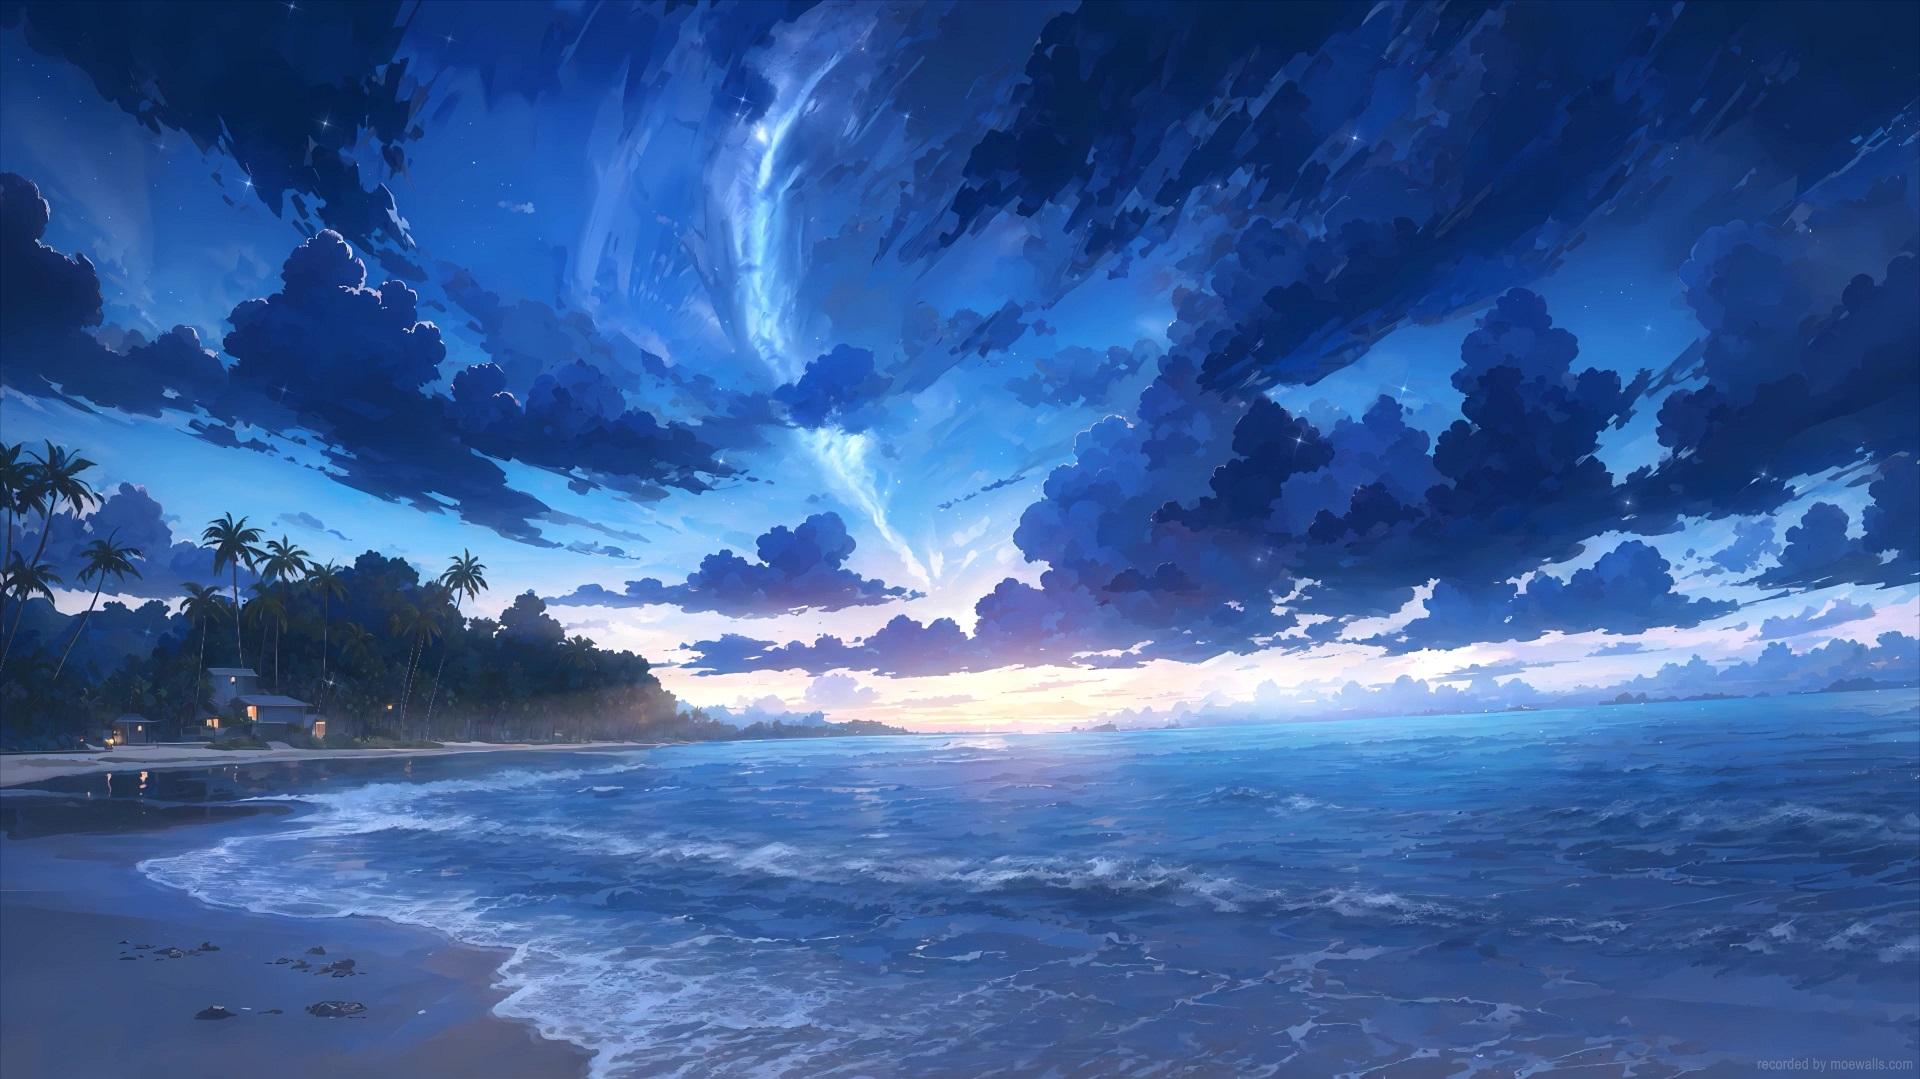 Premium Photo | Anime flat calm ocean under a blue sky in banner format